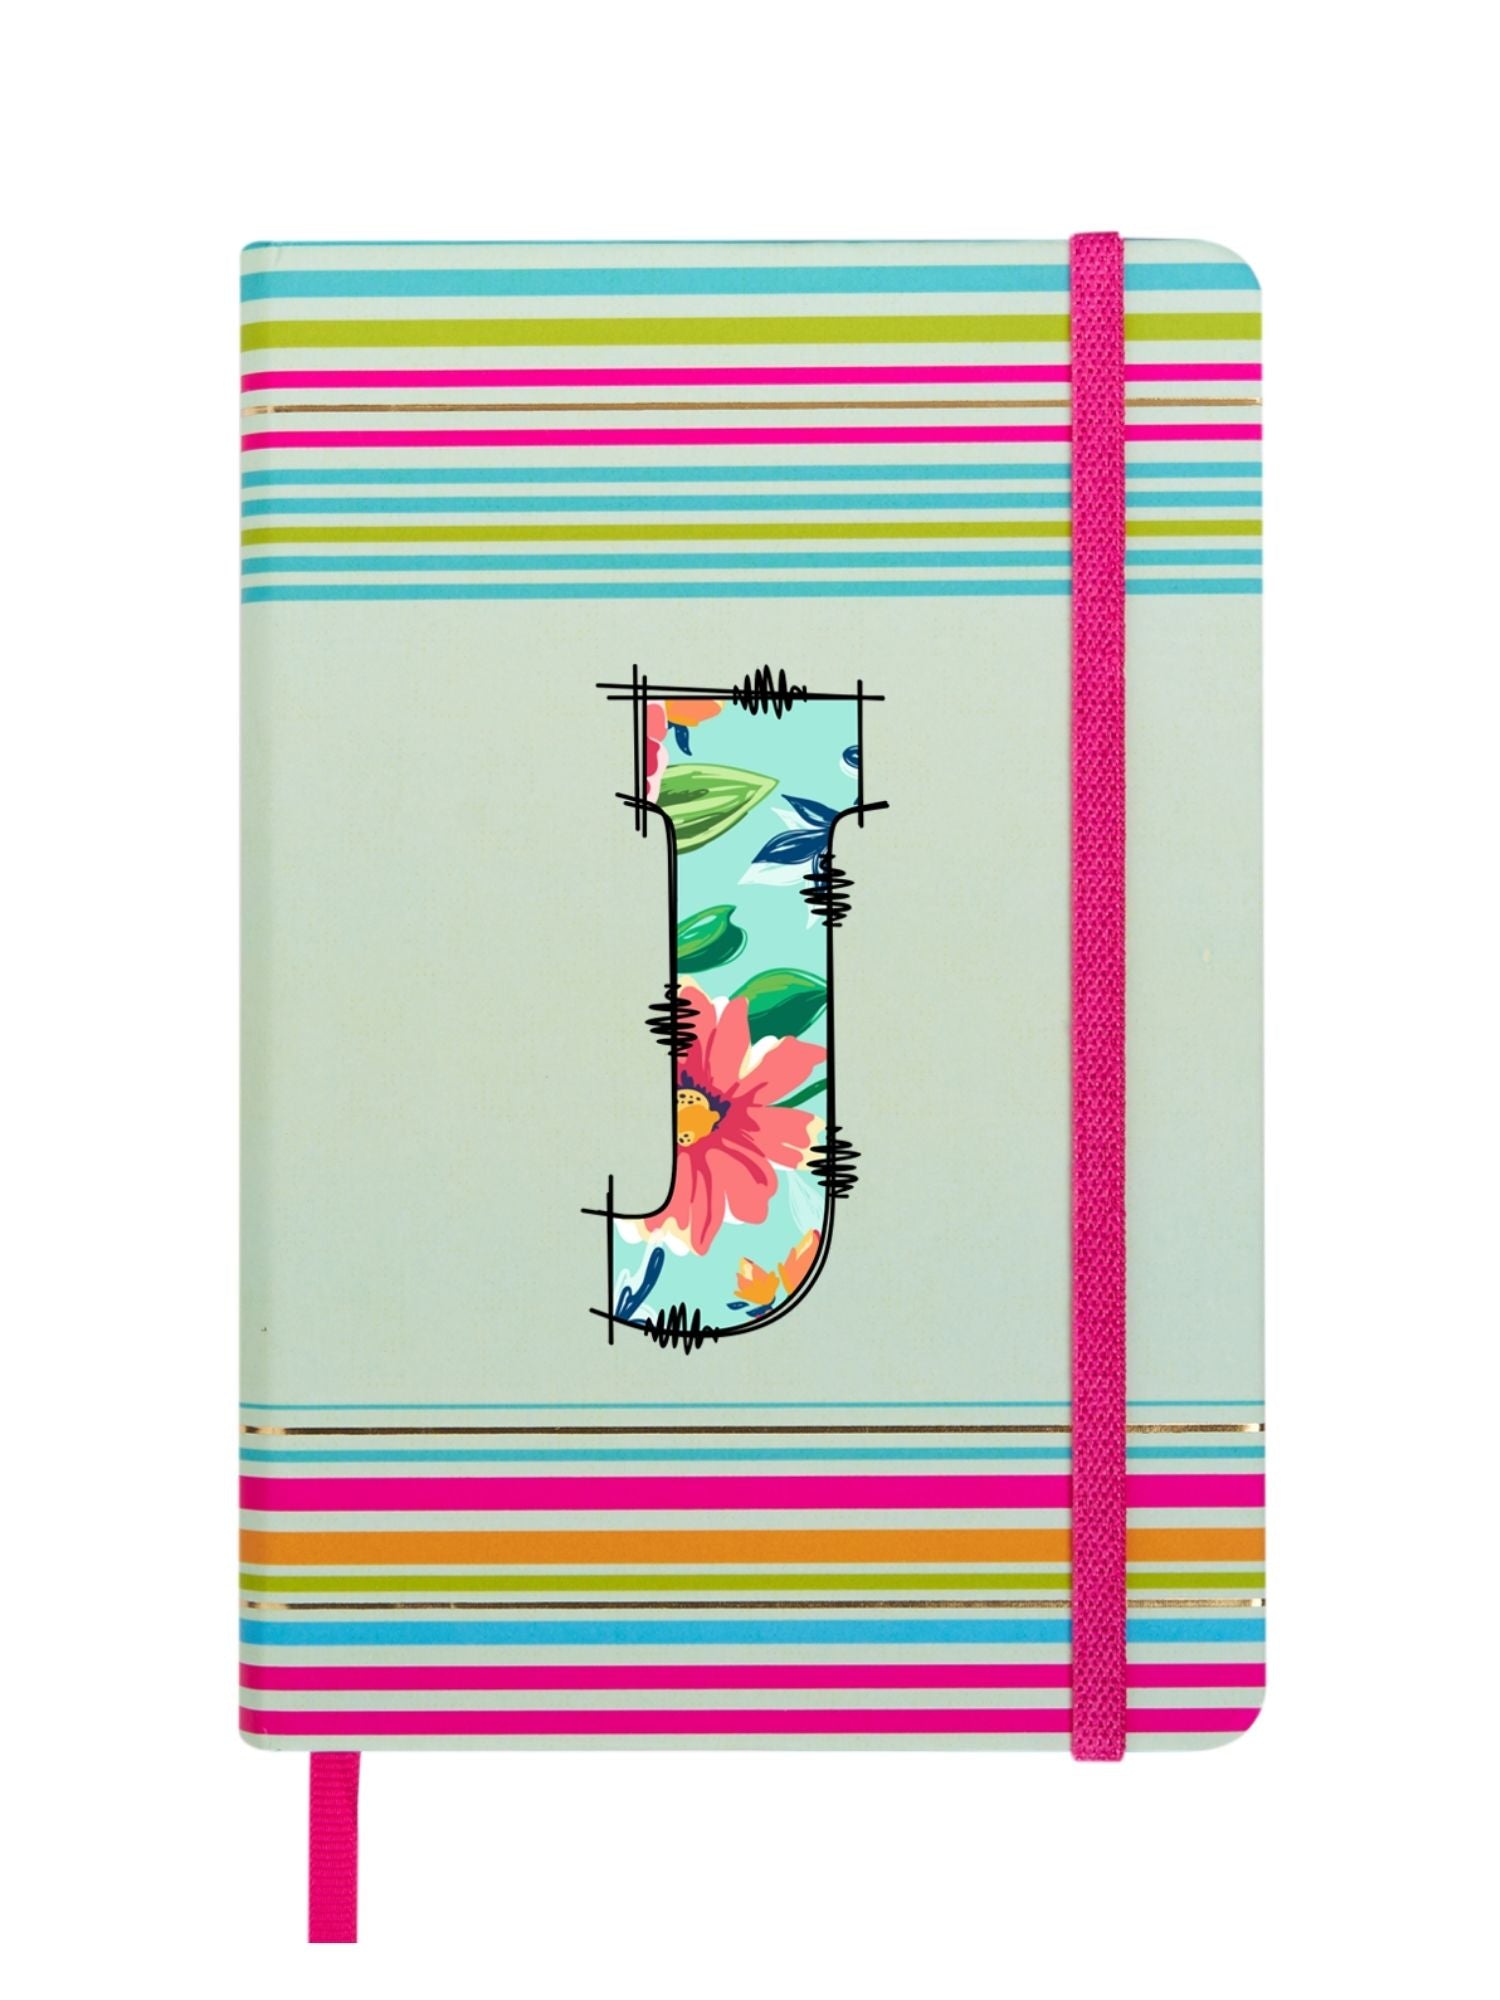 Doodle Initial J Stripes Theme Premium Hard Bound B6 Notebook Diary